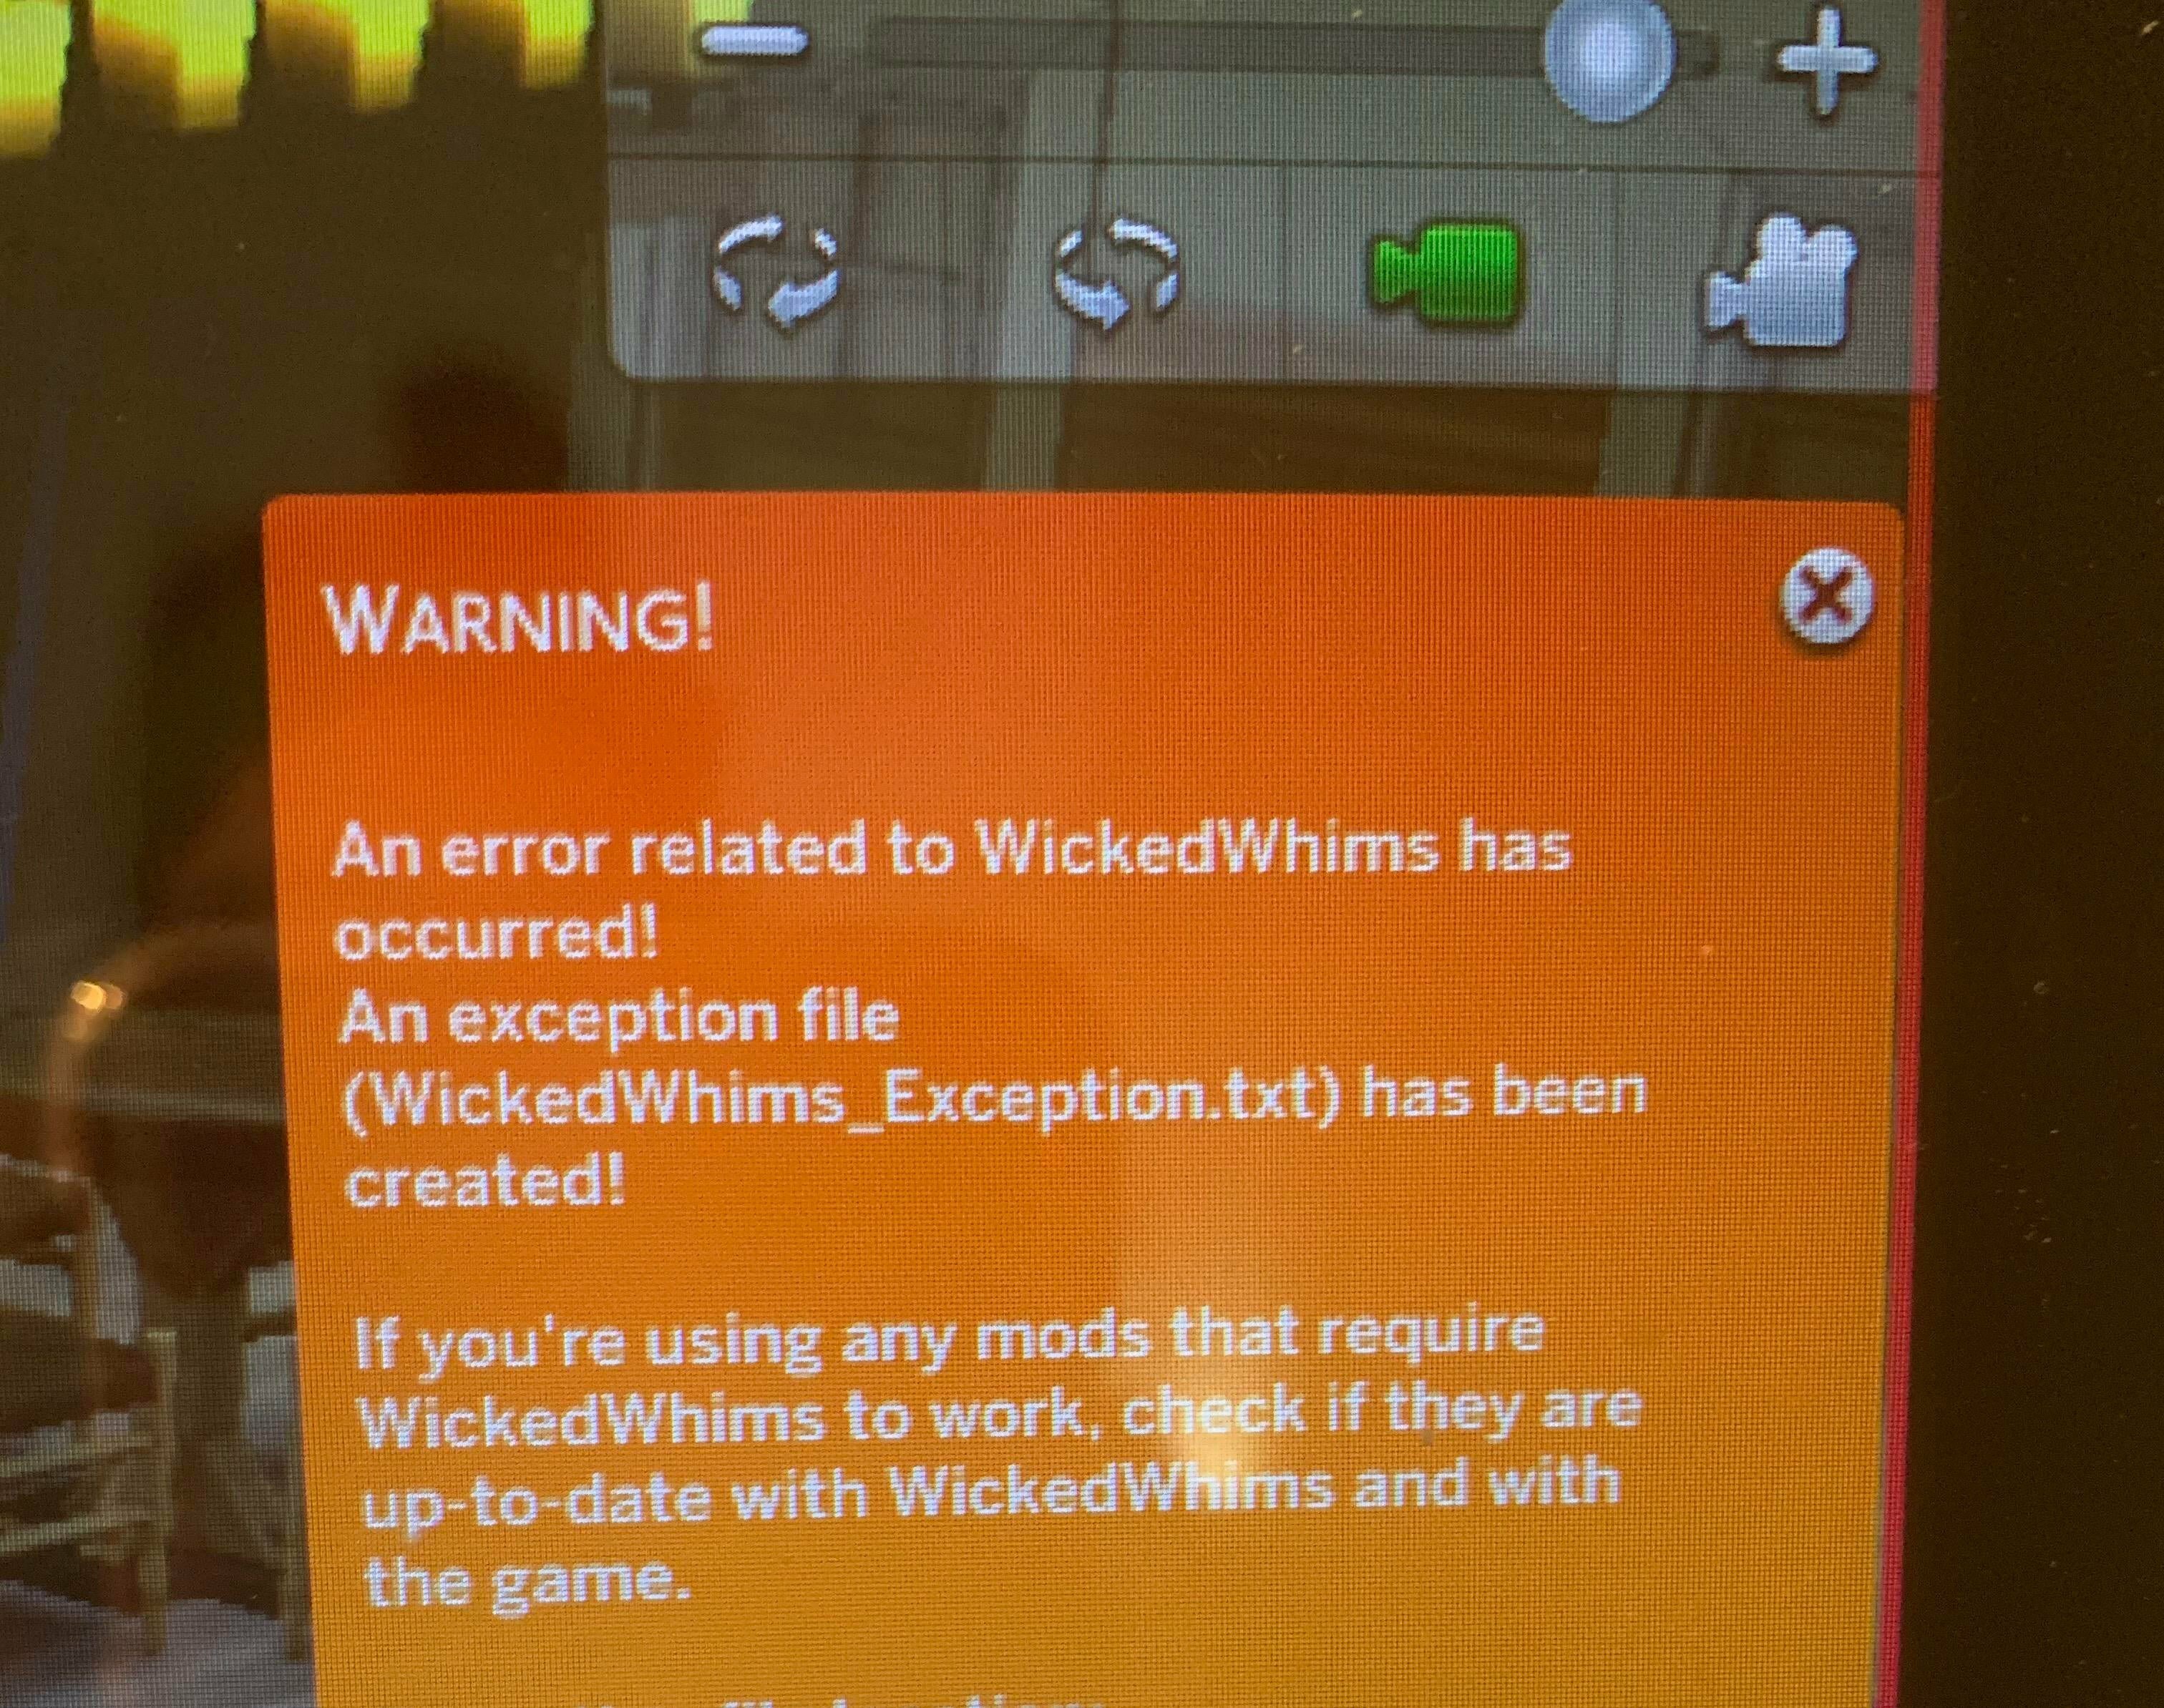 An exception file wicjedwhims как исправить. An Error potentially related to wickedwhims has occurred. Произошла ошибка потенциально связанная с wickedwhims что делать.